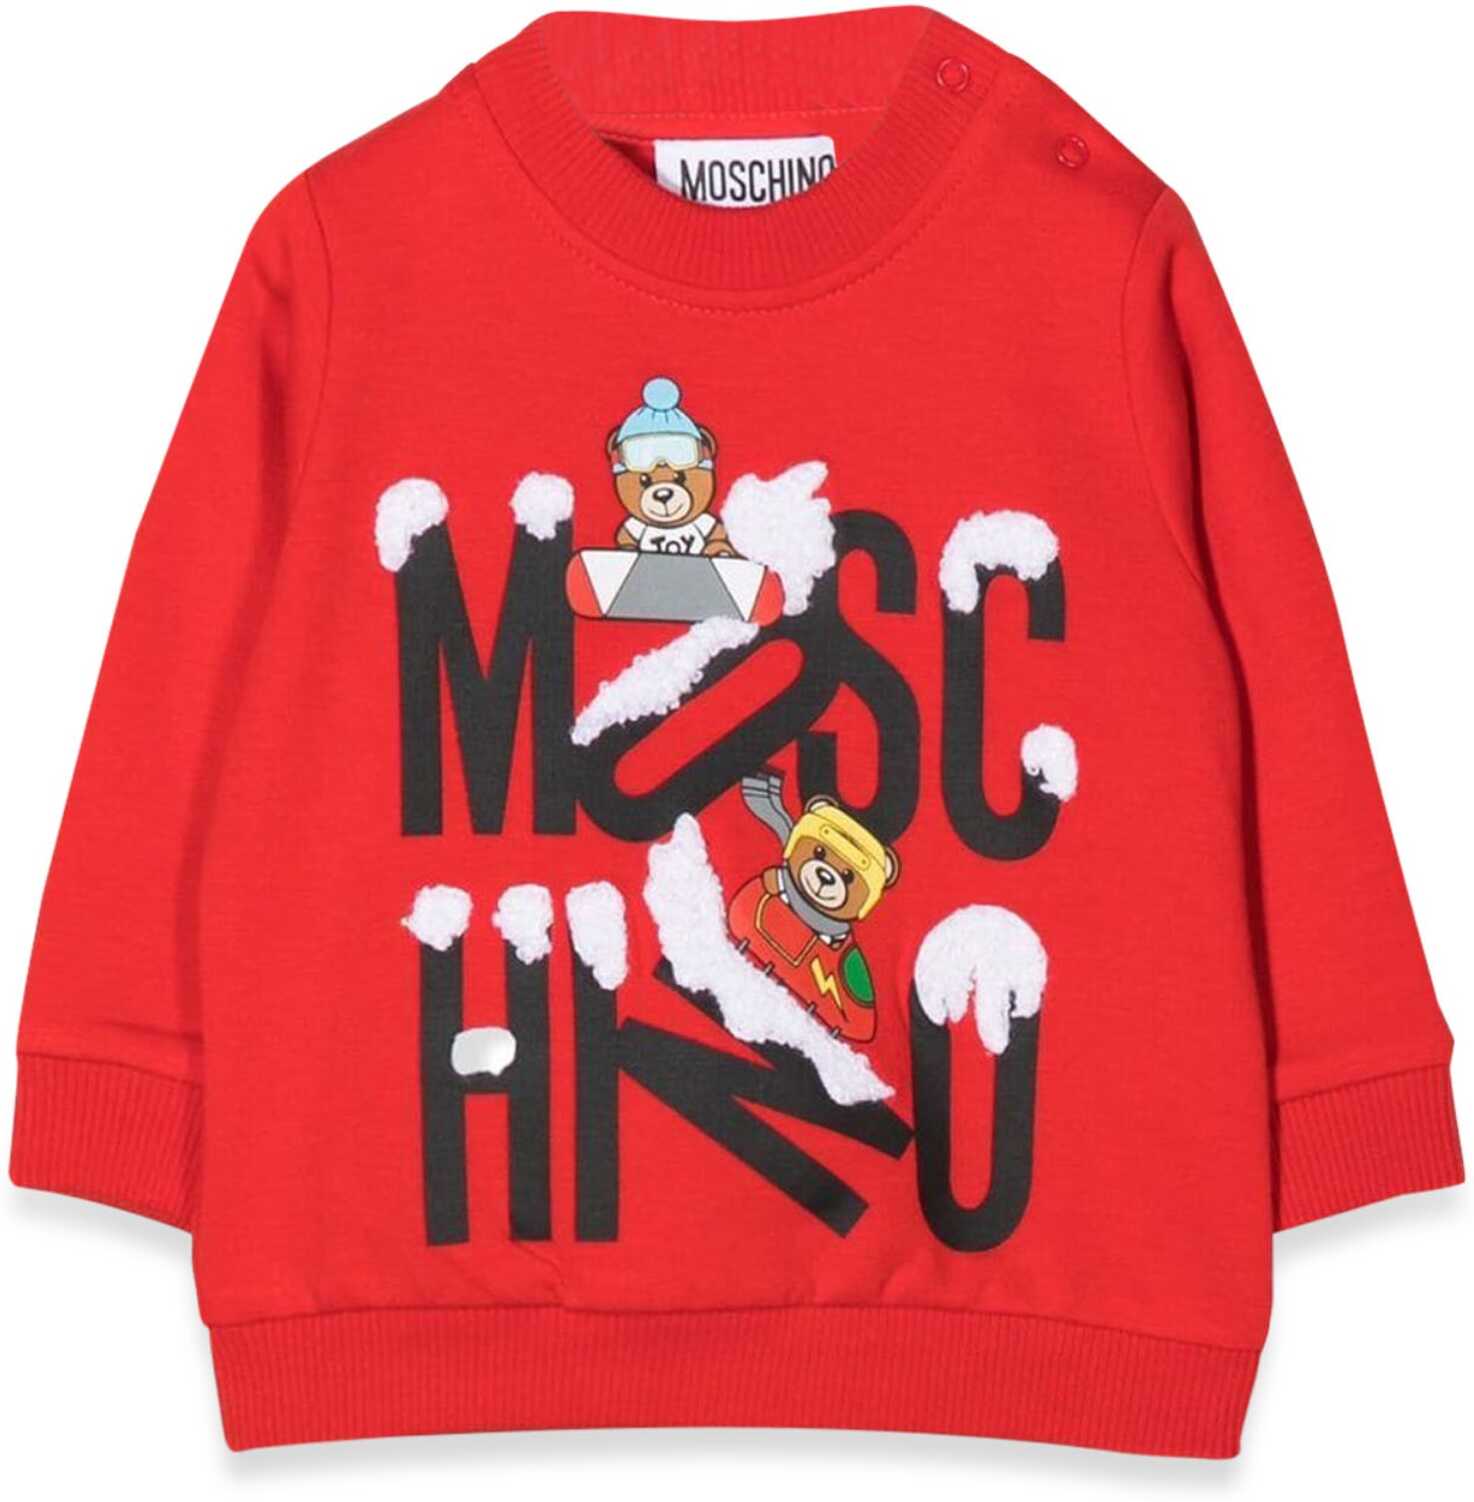 Moschino Large Logo Crewneck Sweatshirt RED